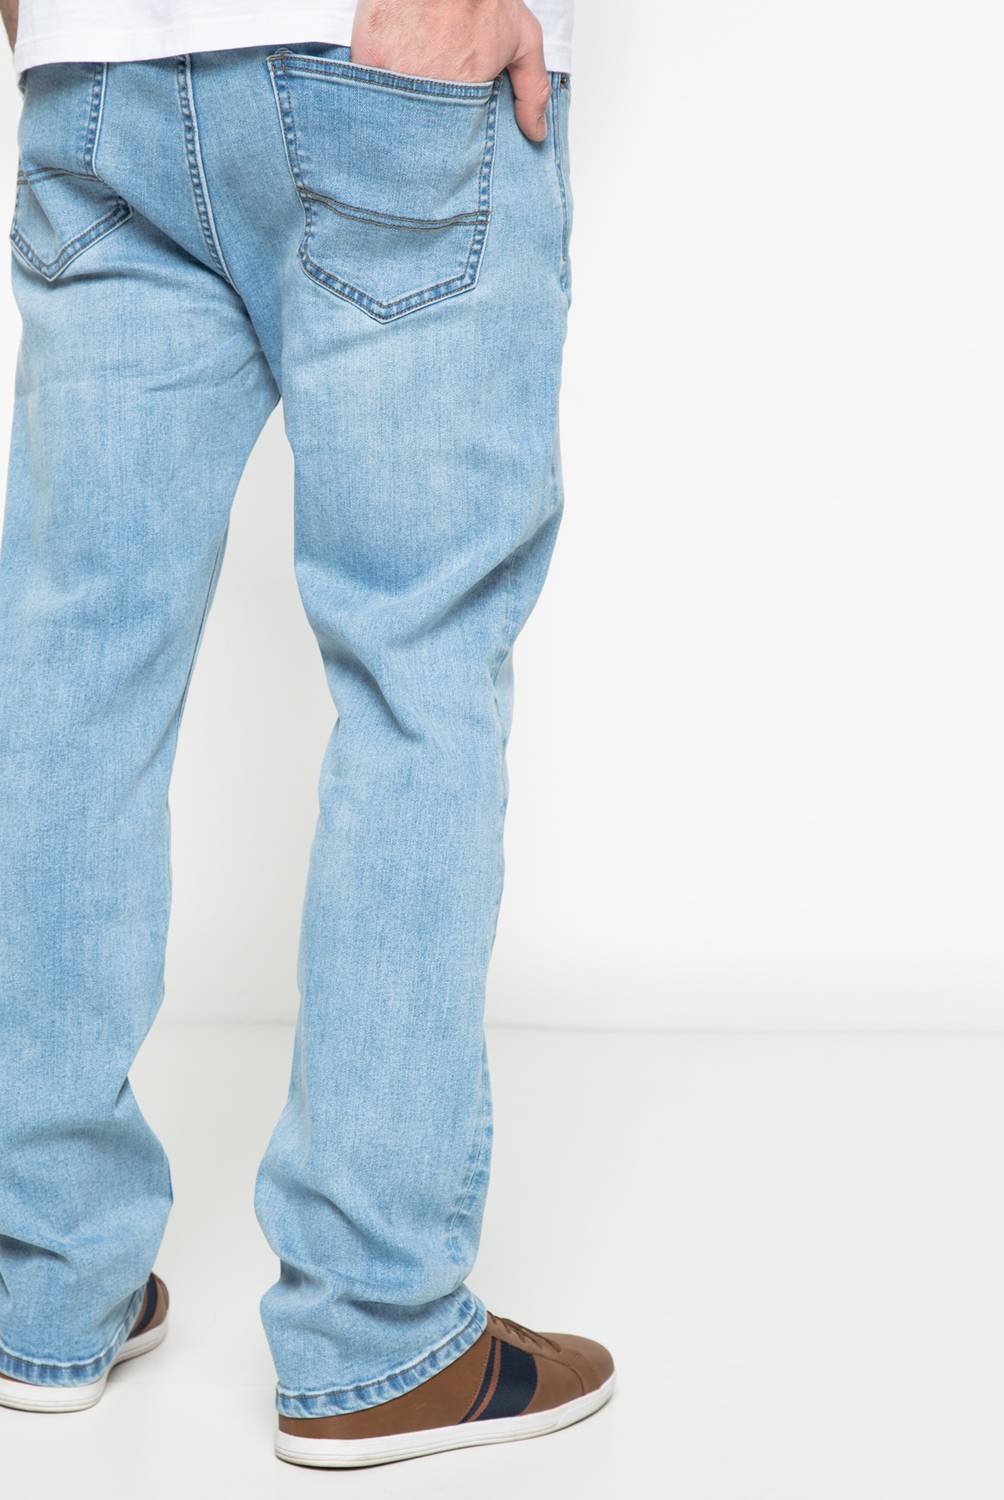 UNIVERSITY CLUB - Jeans Regular Fit Hombre